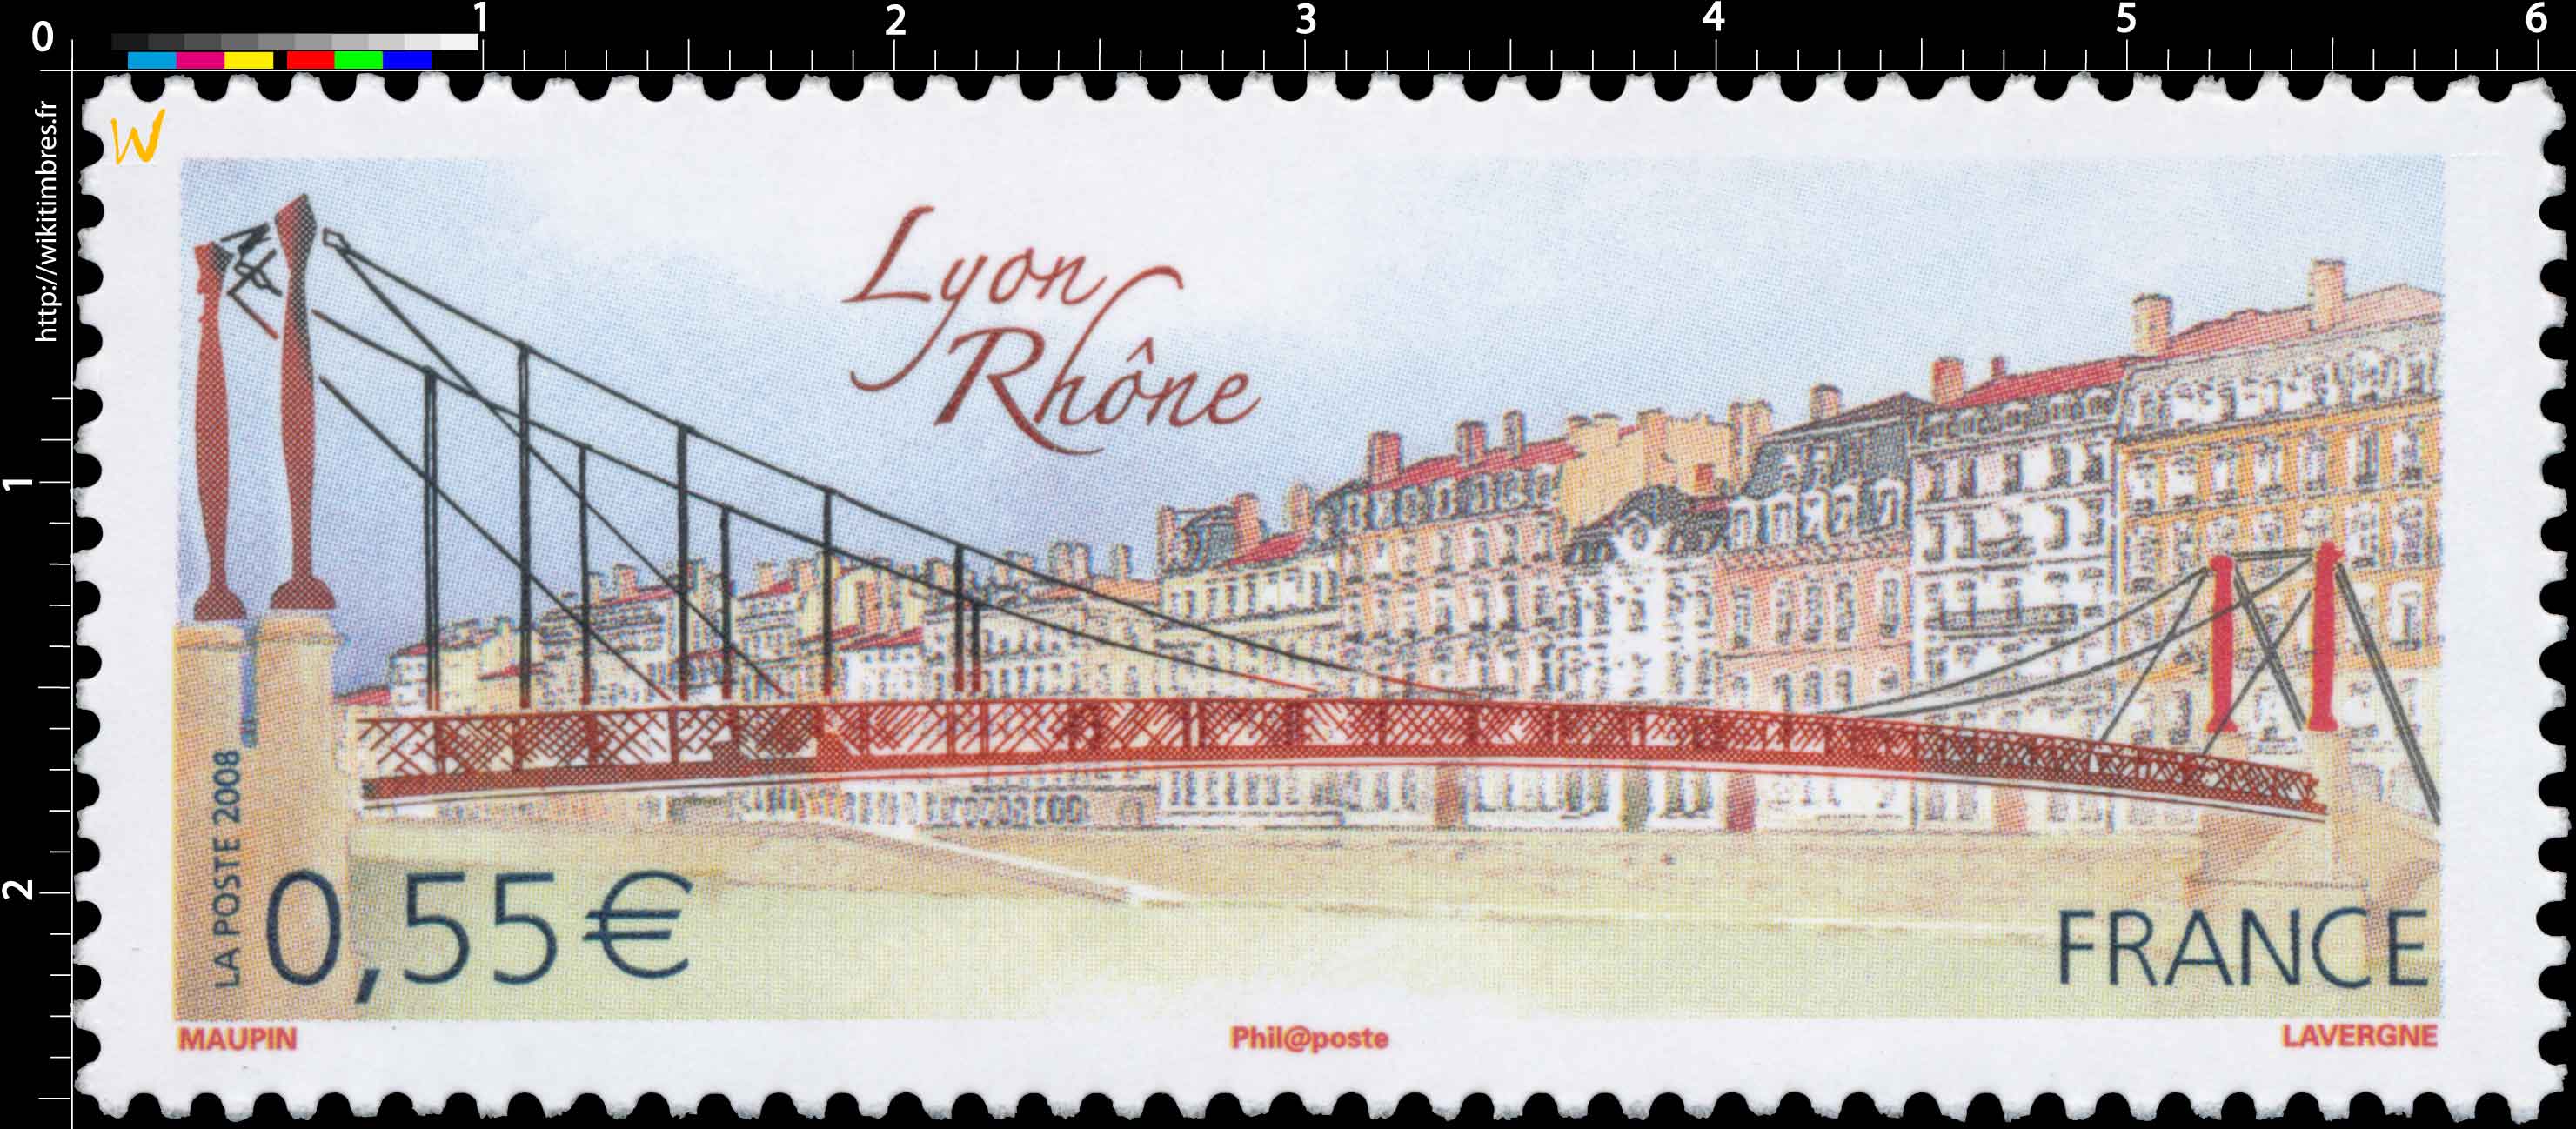 2008 Lyon Rhône